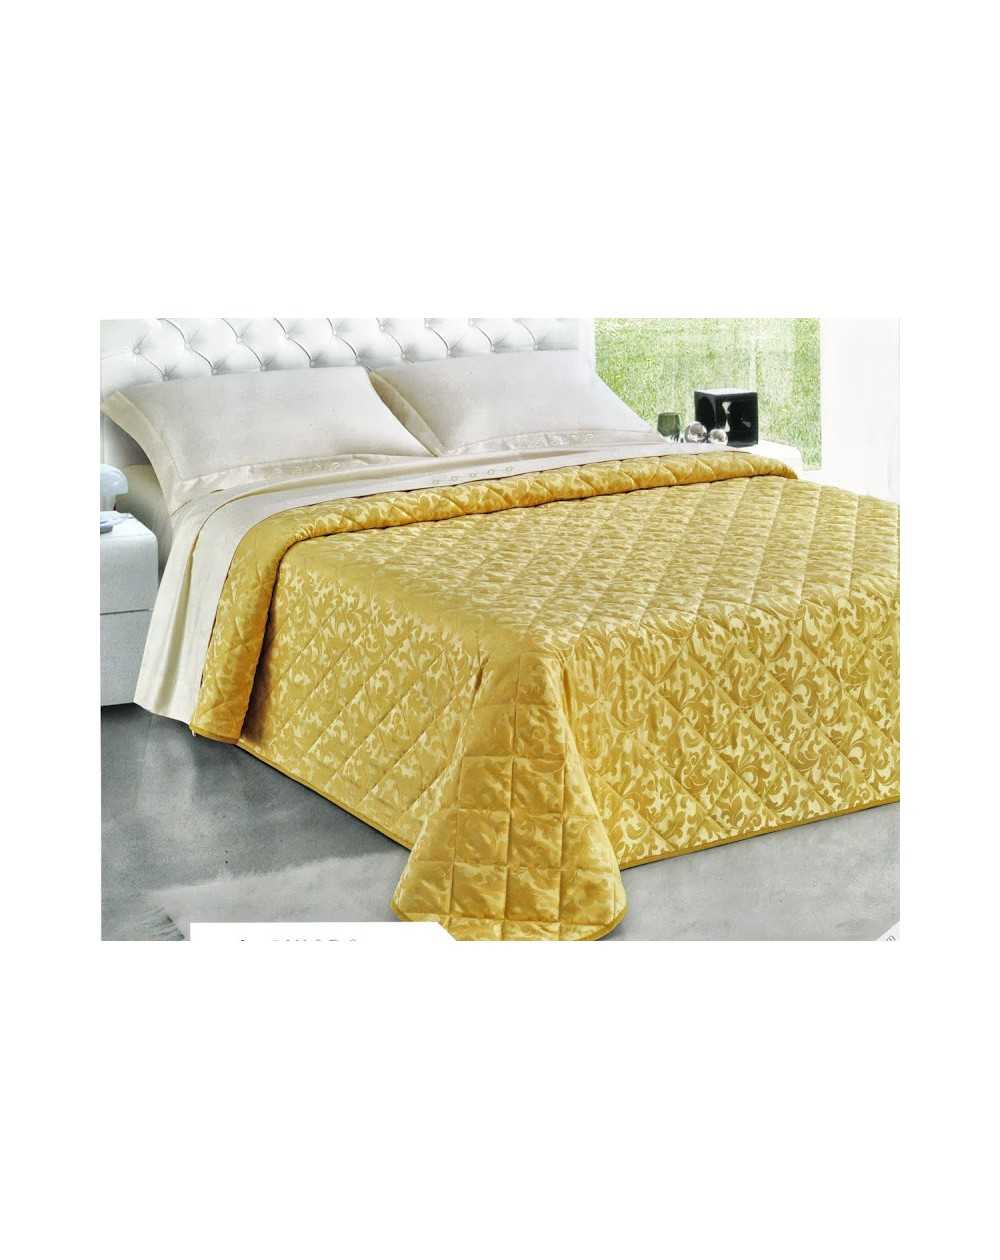 Bedspread CHIARA gold GF Ferrari cloth jacquard fabric